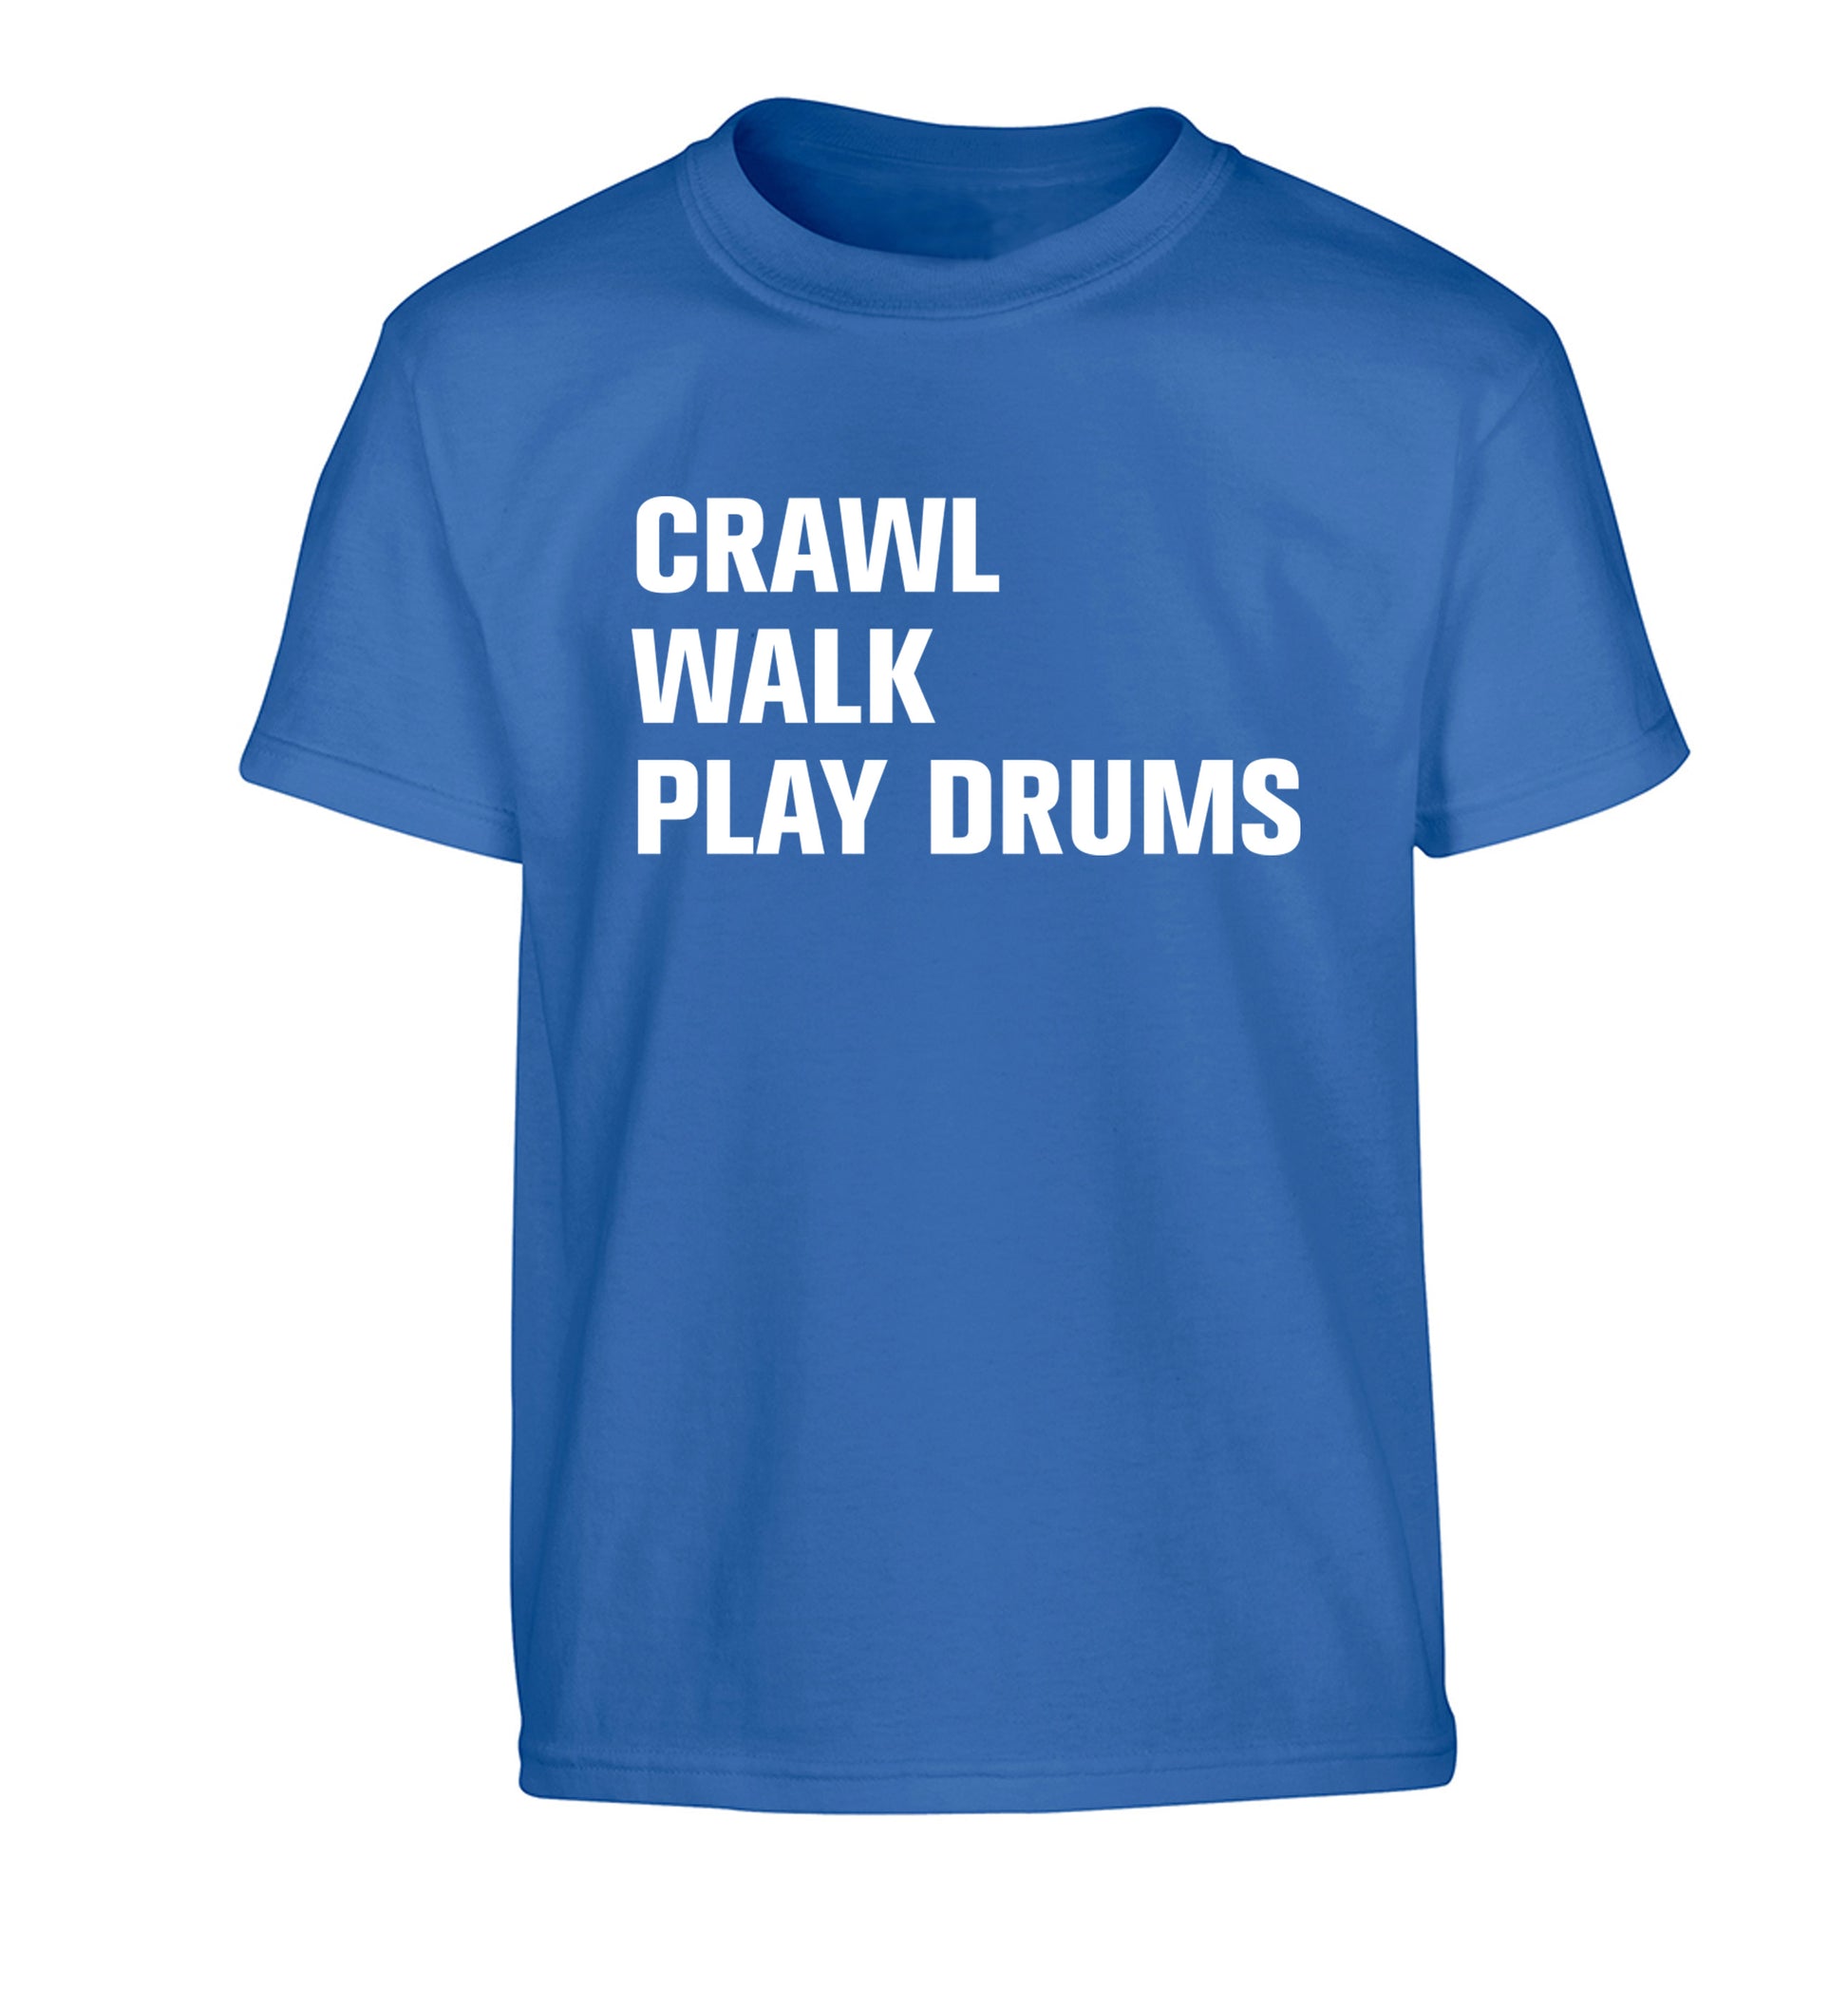 Crawl walk play drums Children's blue Tshirt 12-13 Years